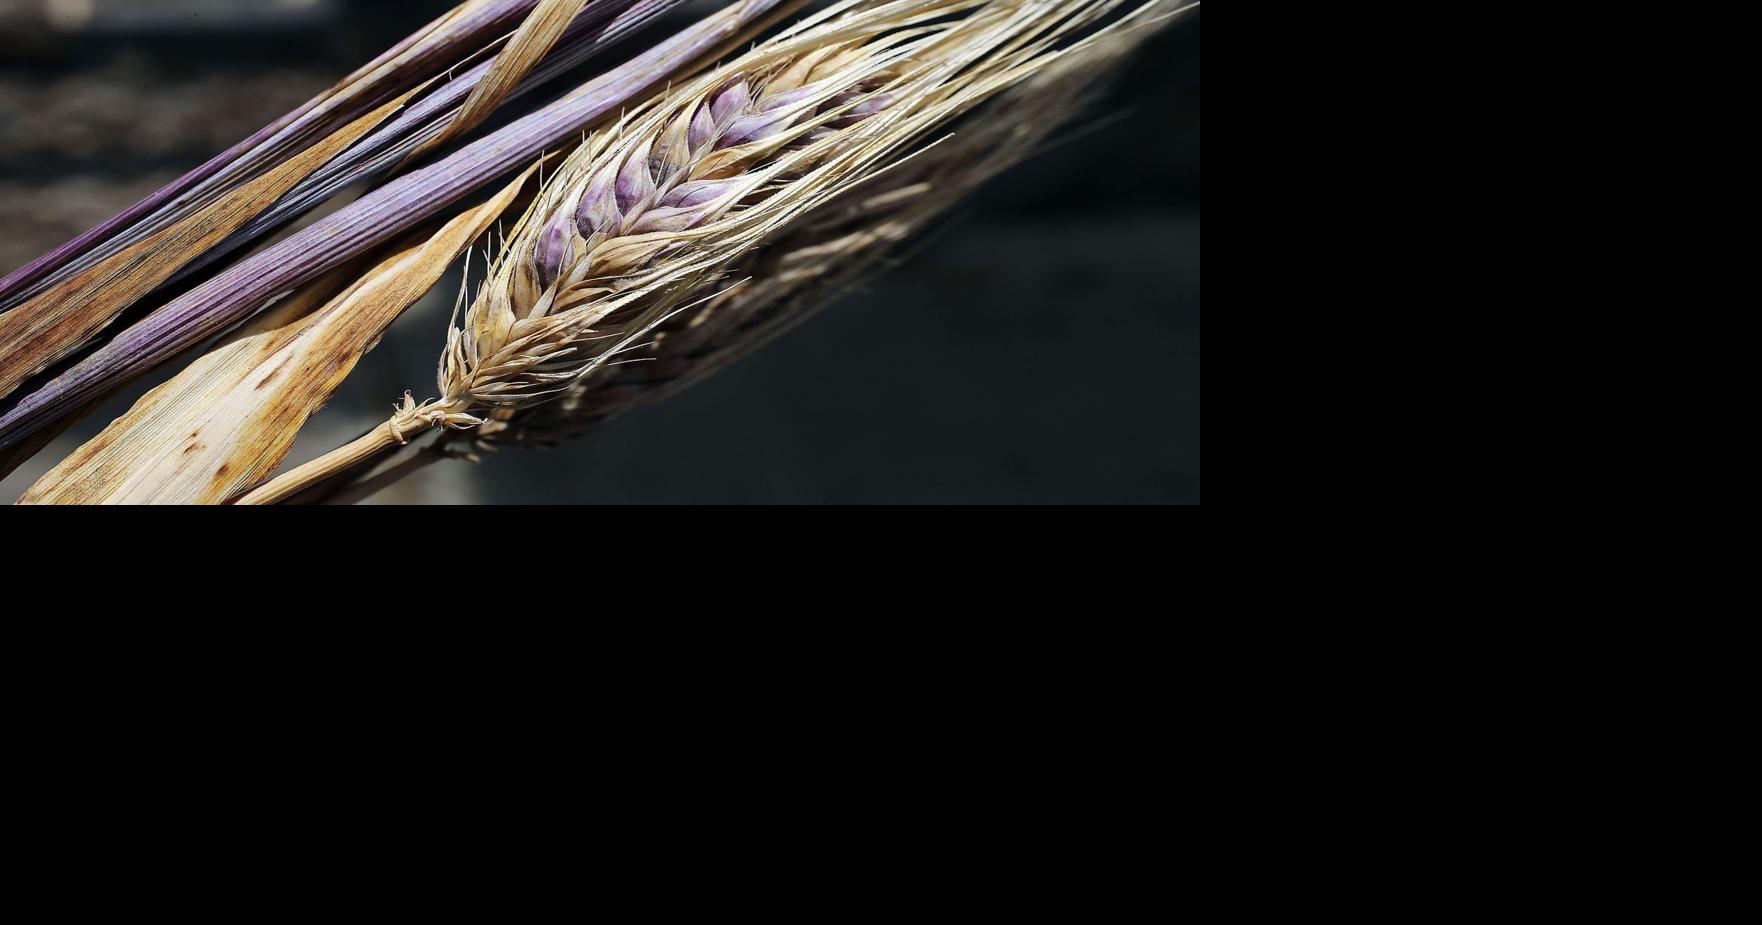 Wheat Straw FANTASY PURPLE